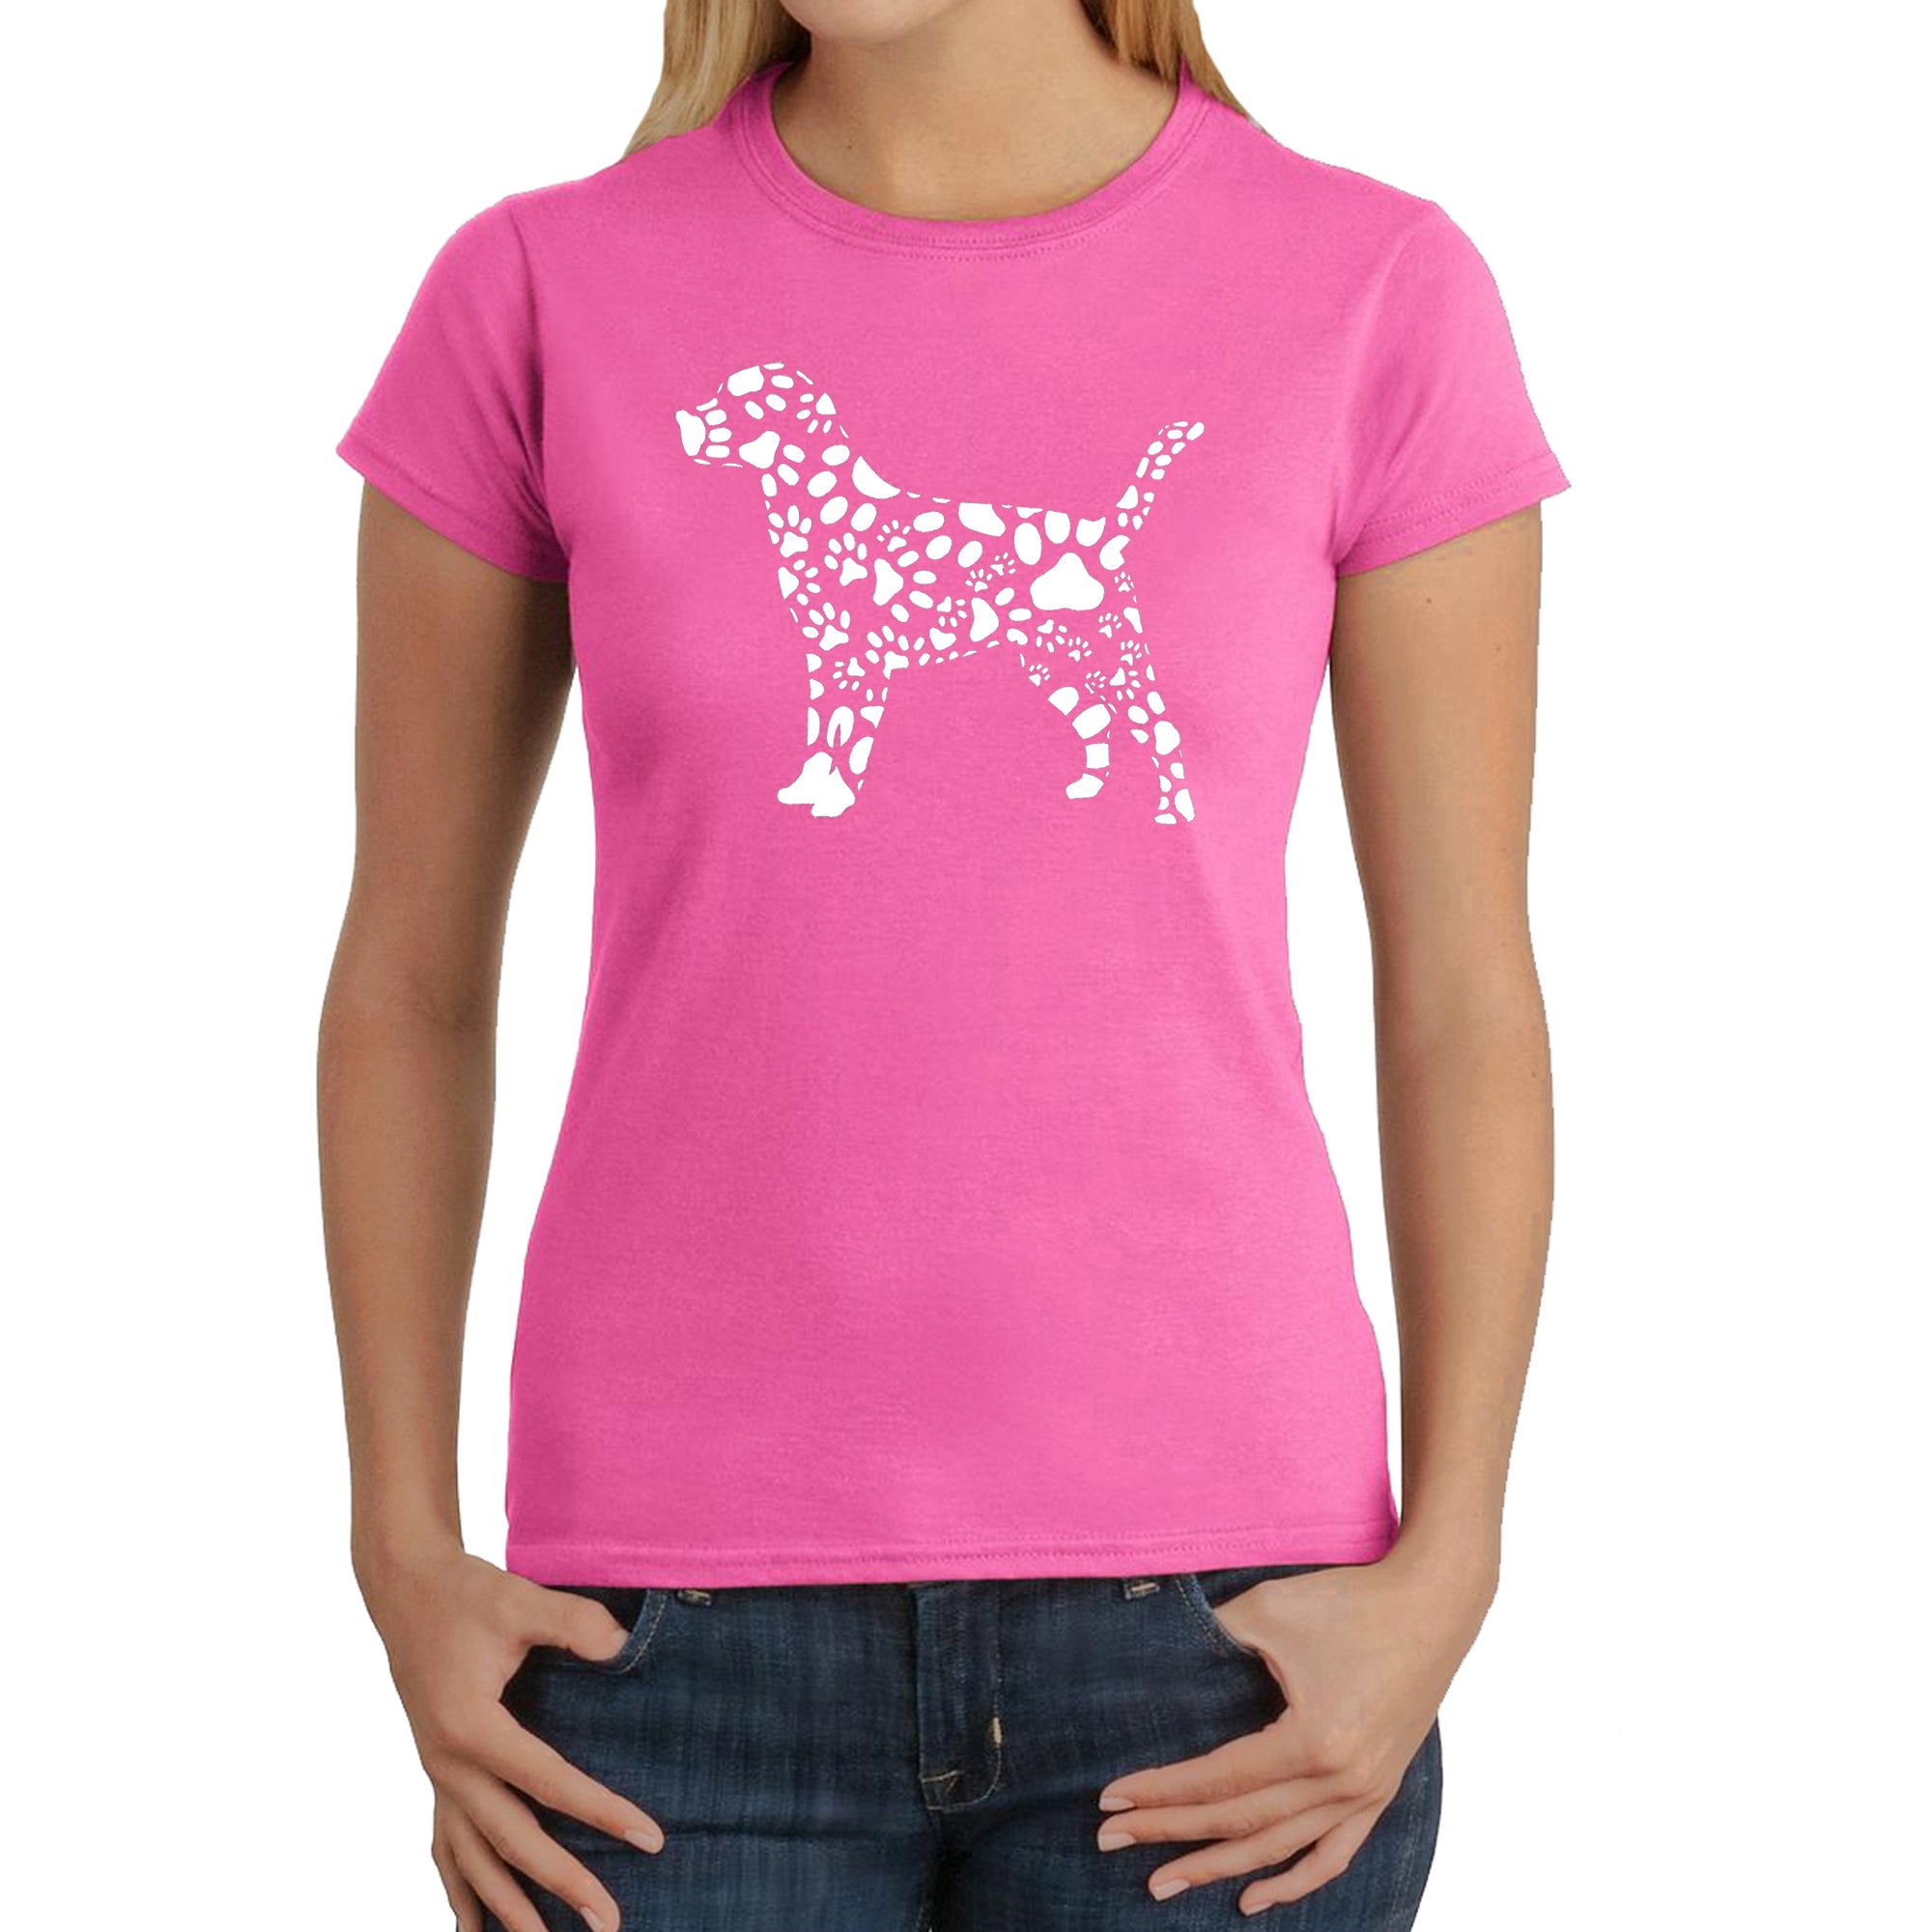 Dog Paw Prints - Women's Word Art T-Shirt - Pink - Small